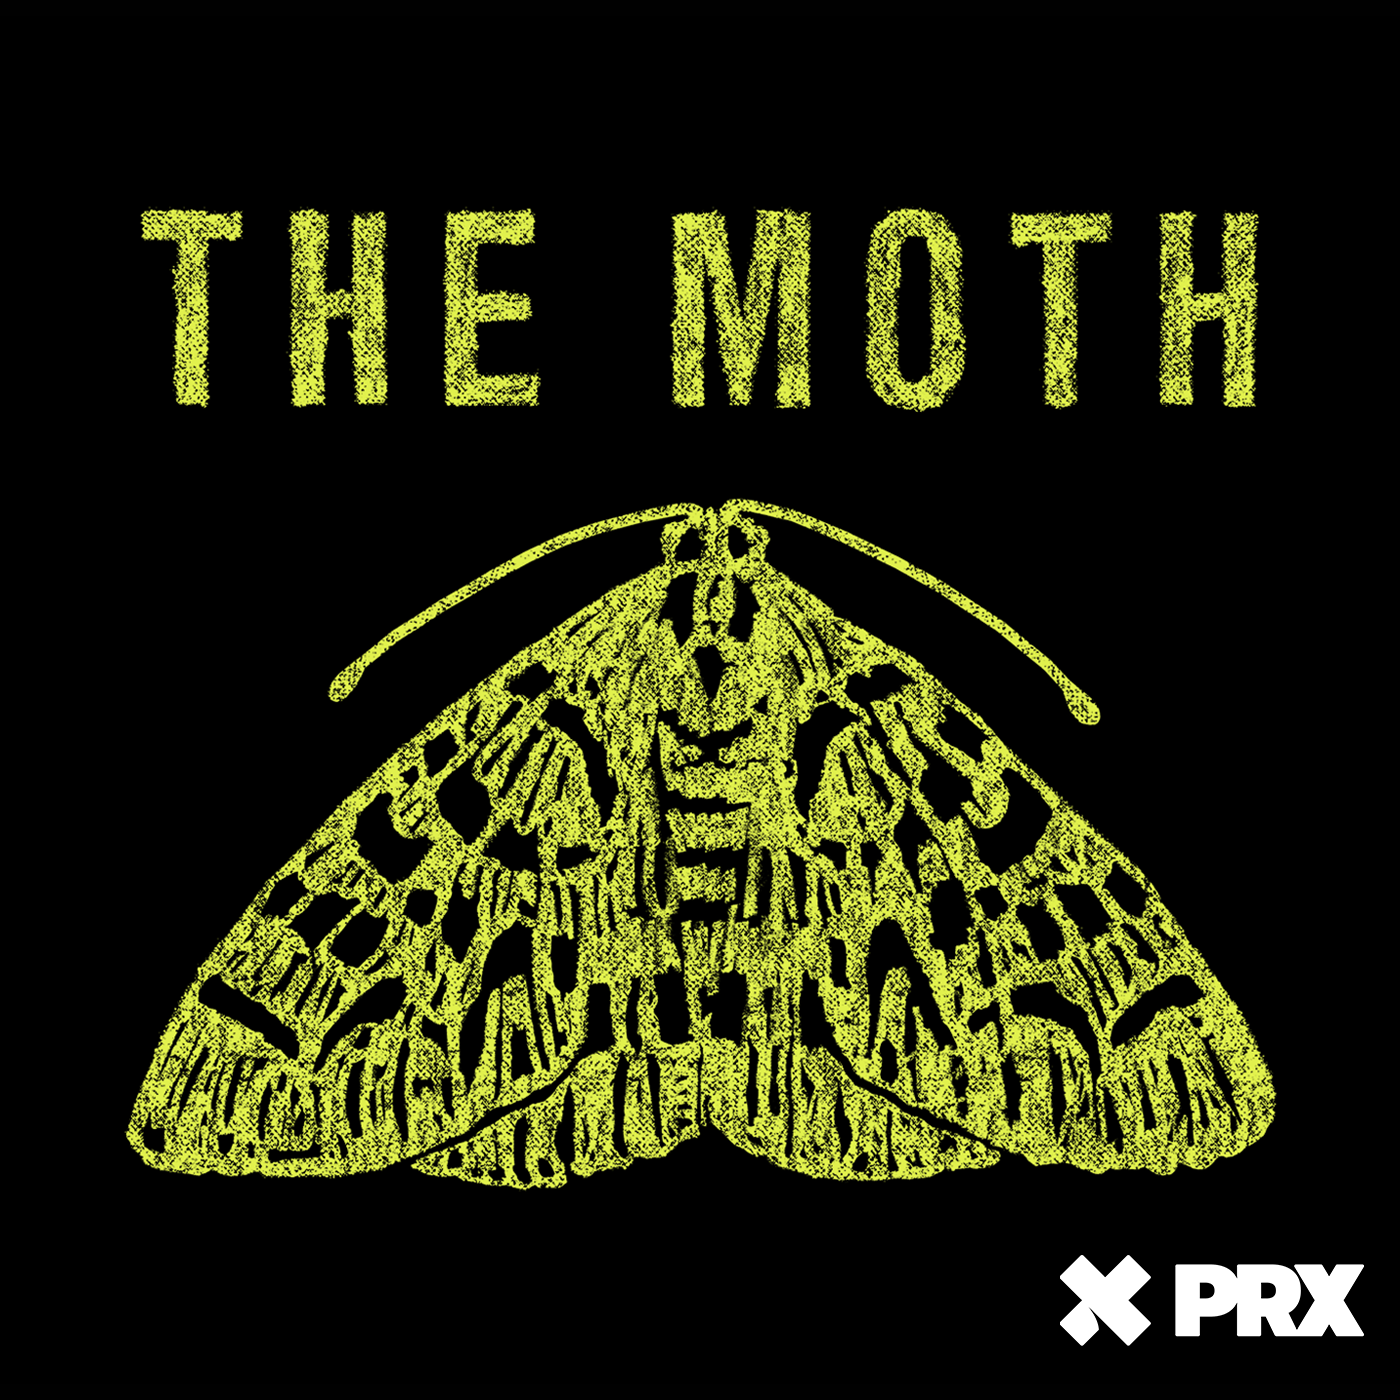 The Moth Radio Hour: Hidden Beauty